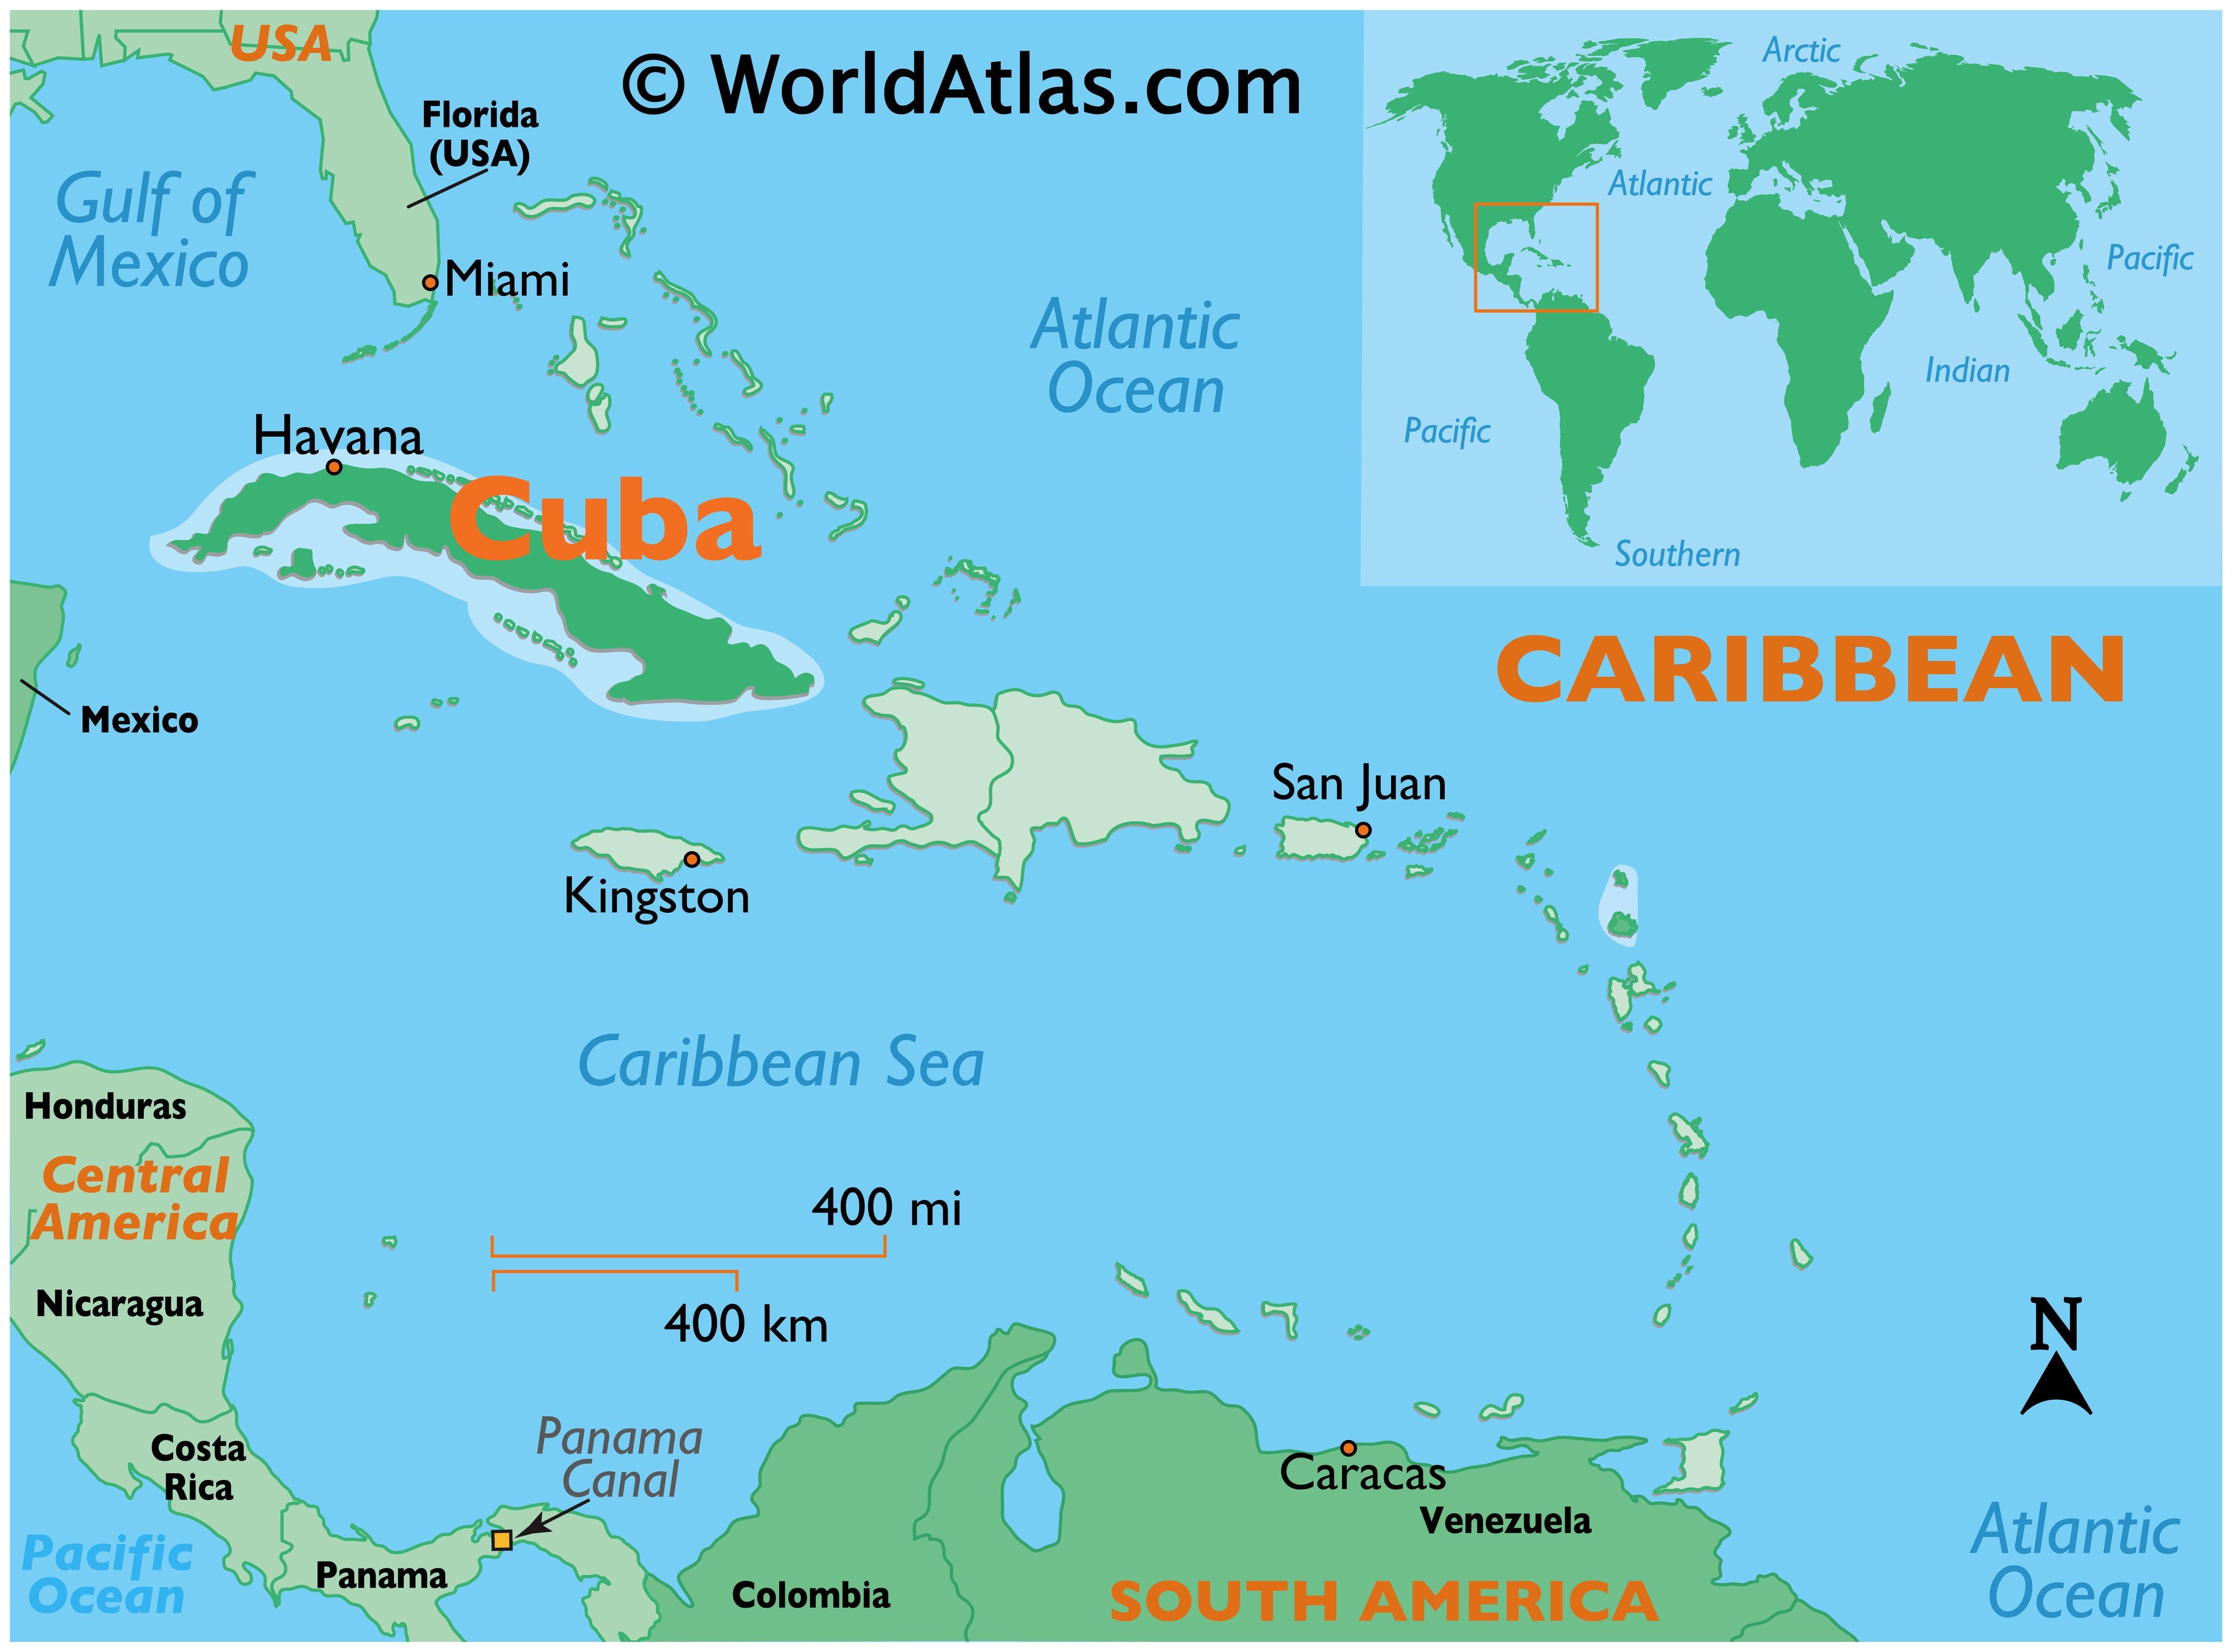 Cuba Map / Geography of Cuba / Map of Cuba - Worldatlas.com